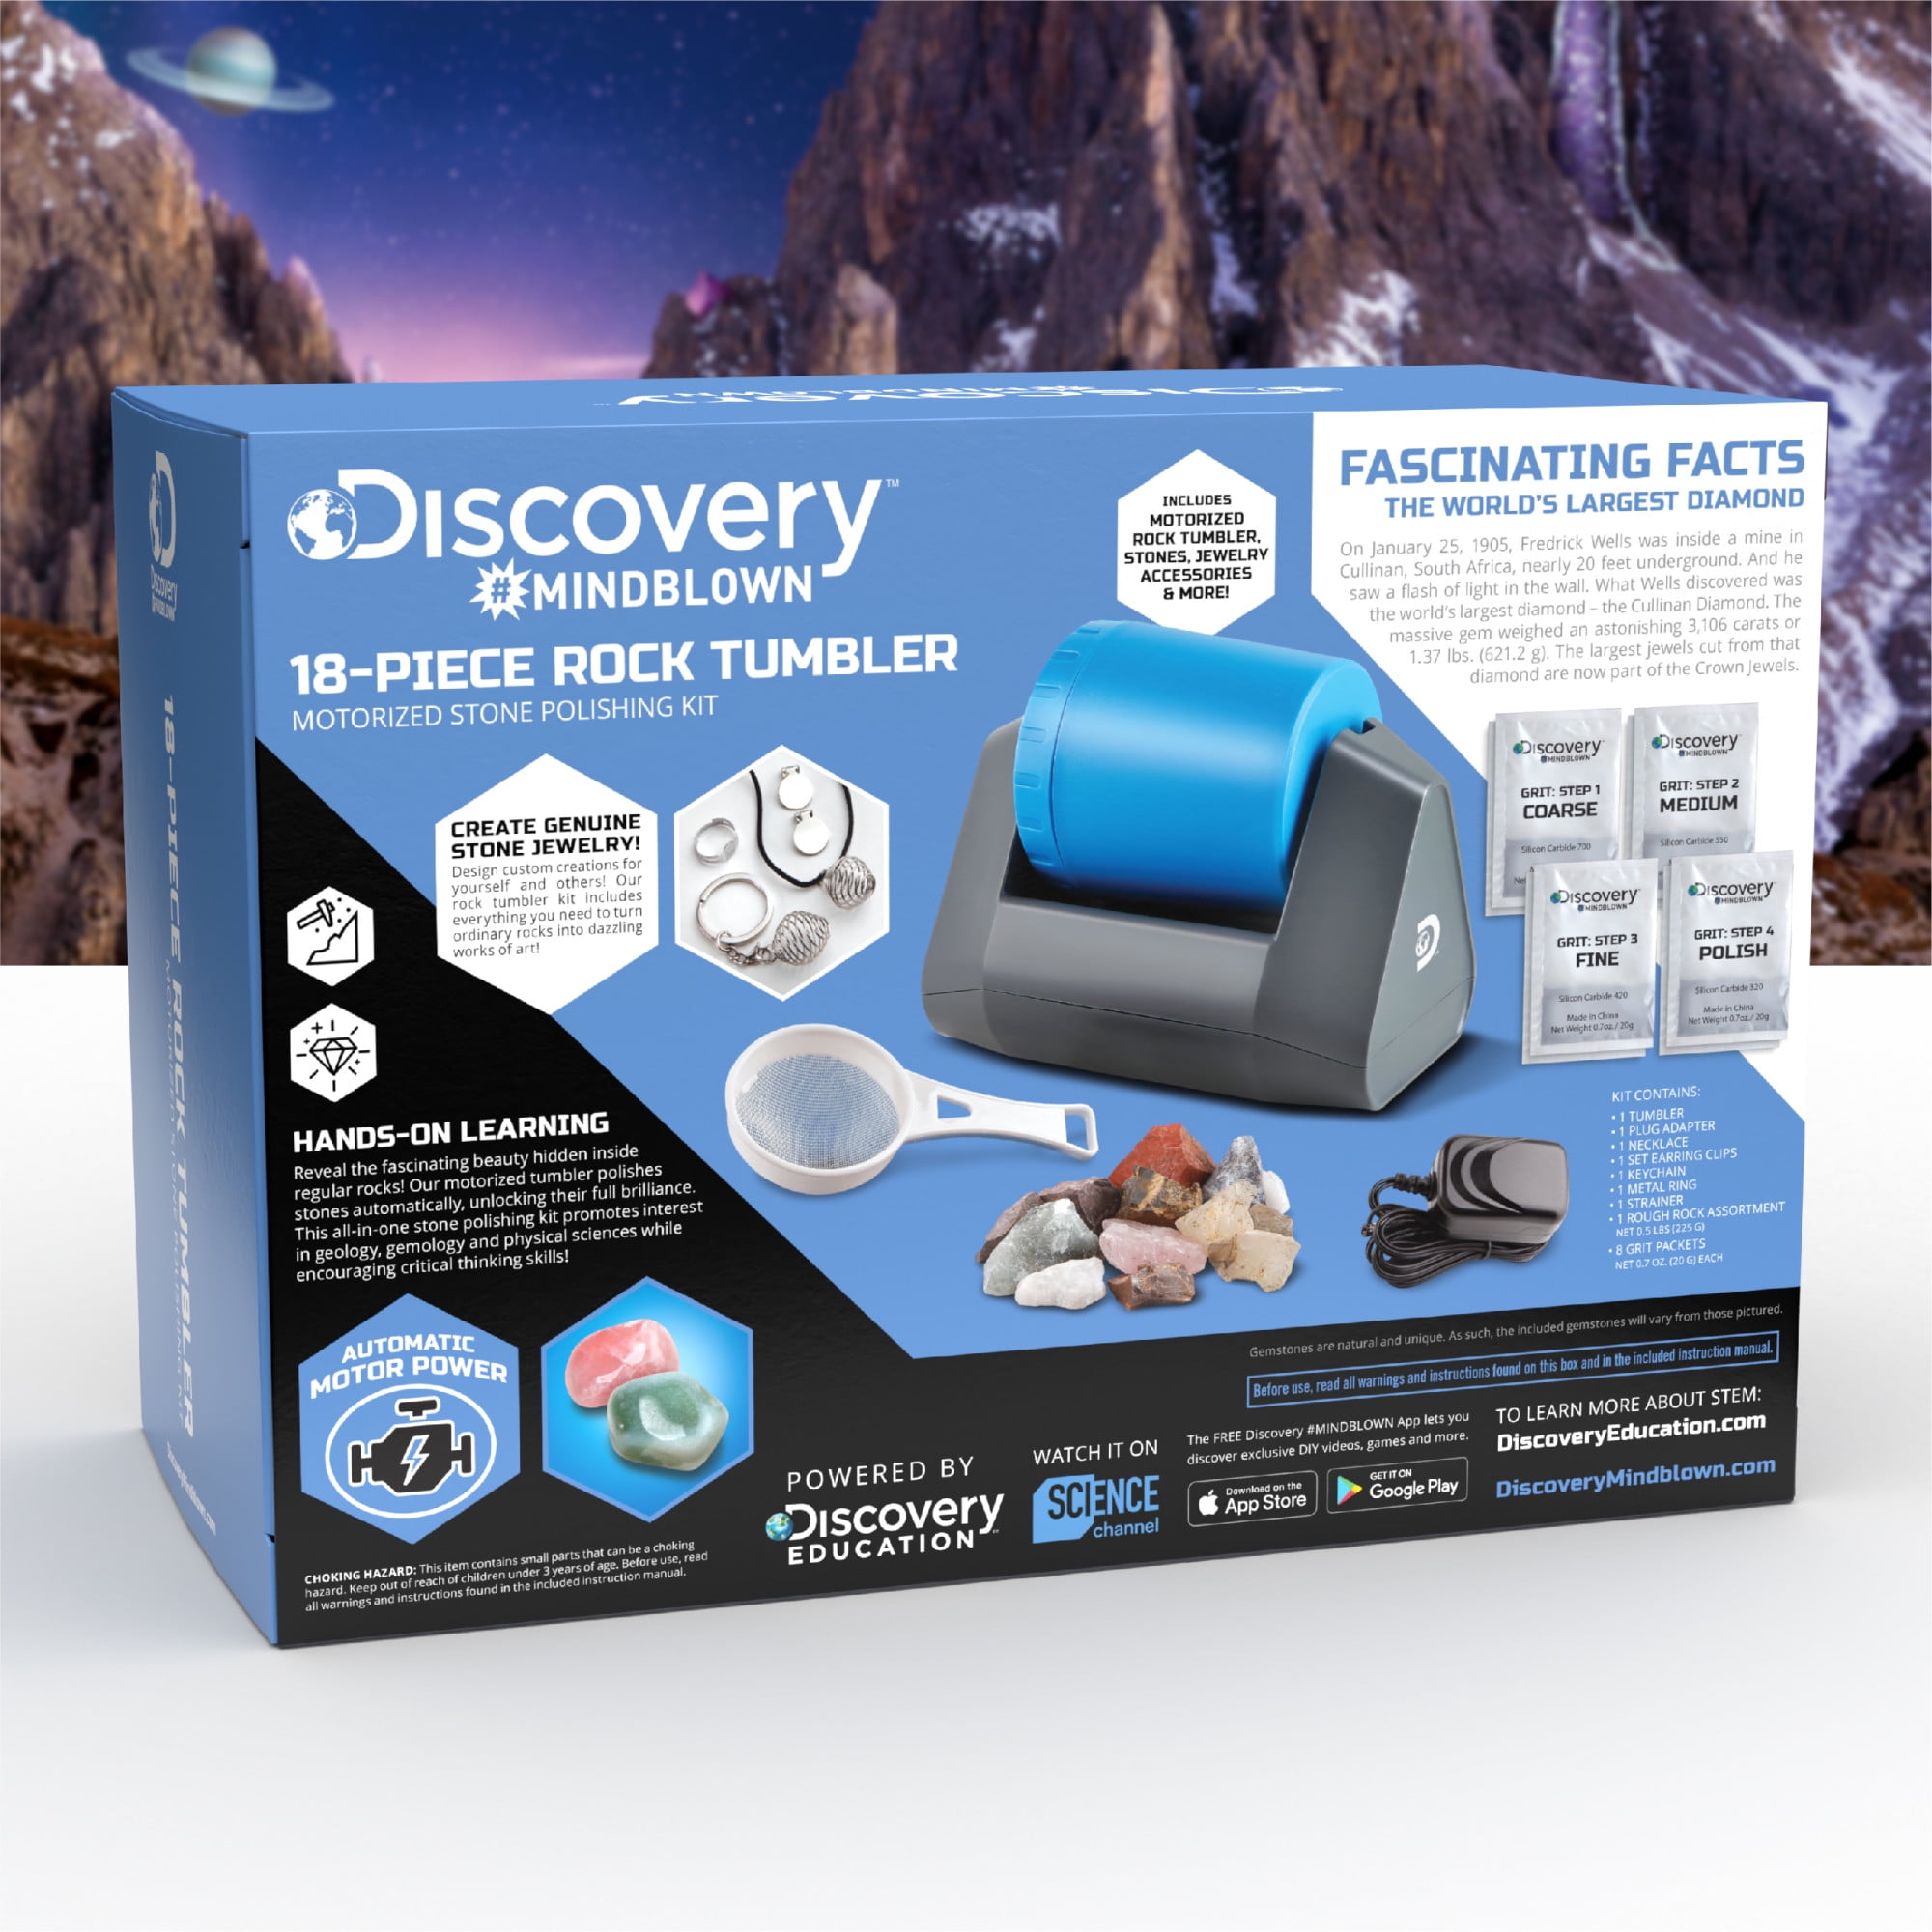 Discovery #Mindblown 18pc Rock Tumbler Motorized Stone Polishing Kit